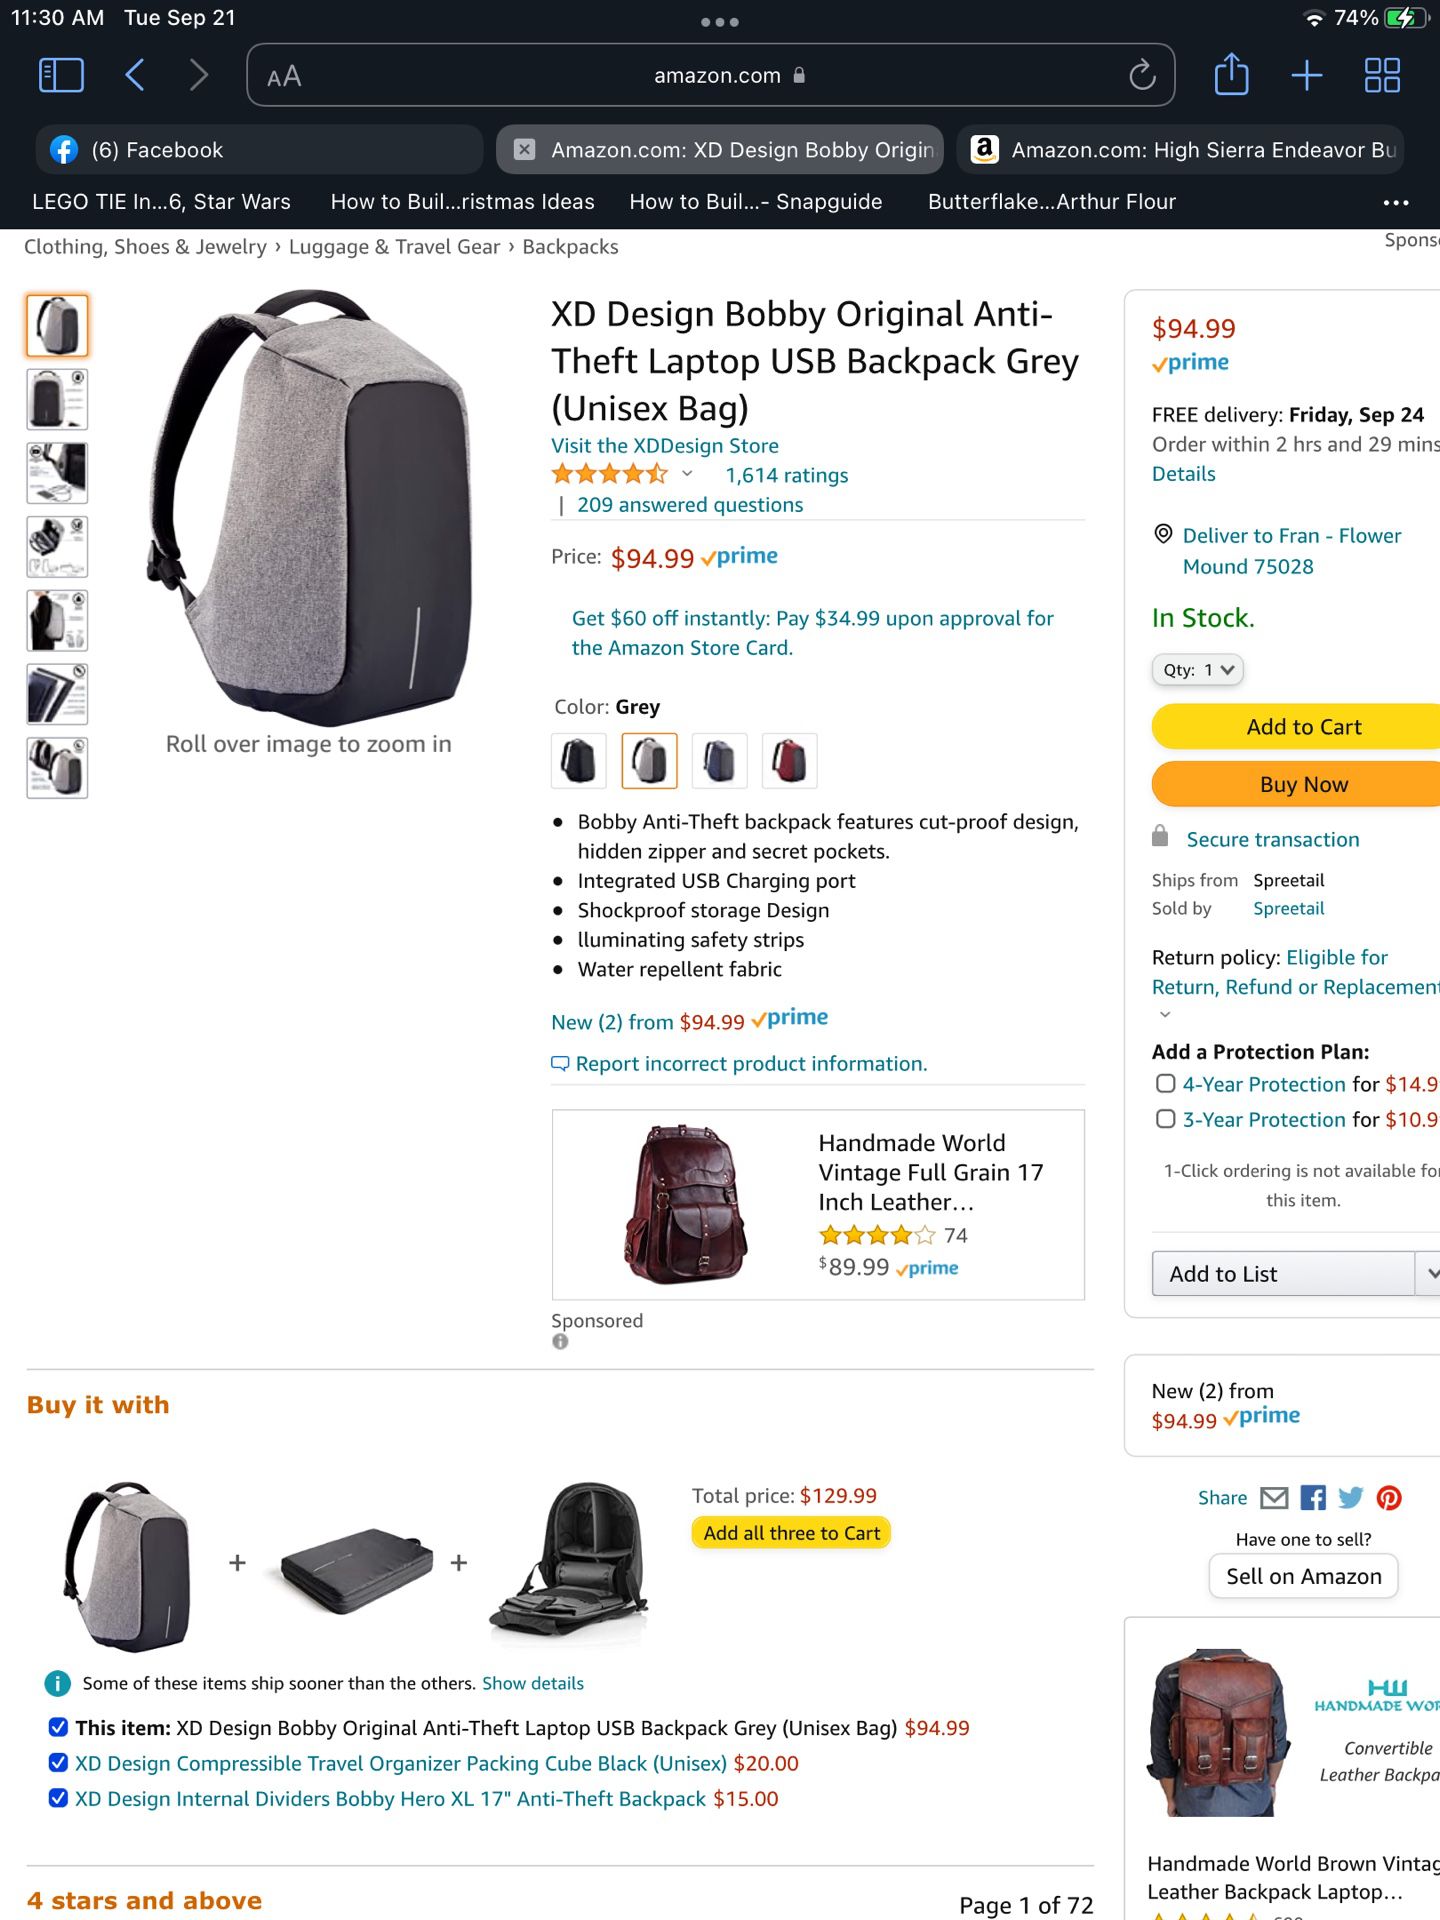 $65 New New XD Design Bobby Original Anti-Theft Laptop USB Backpack Grey 